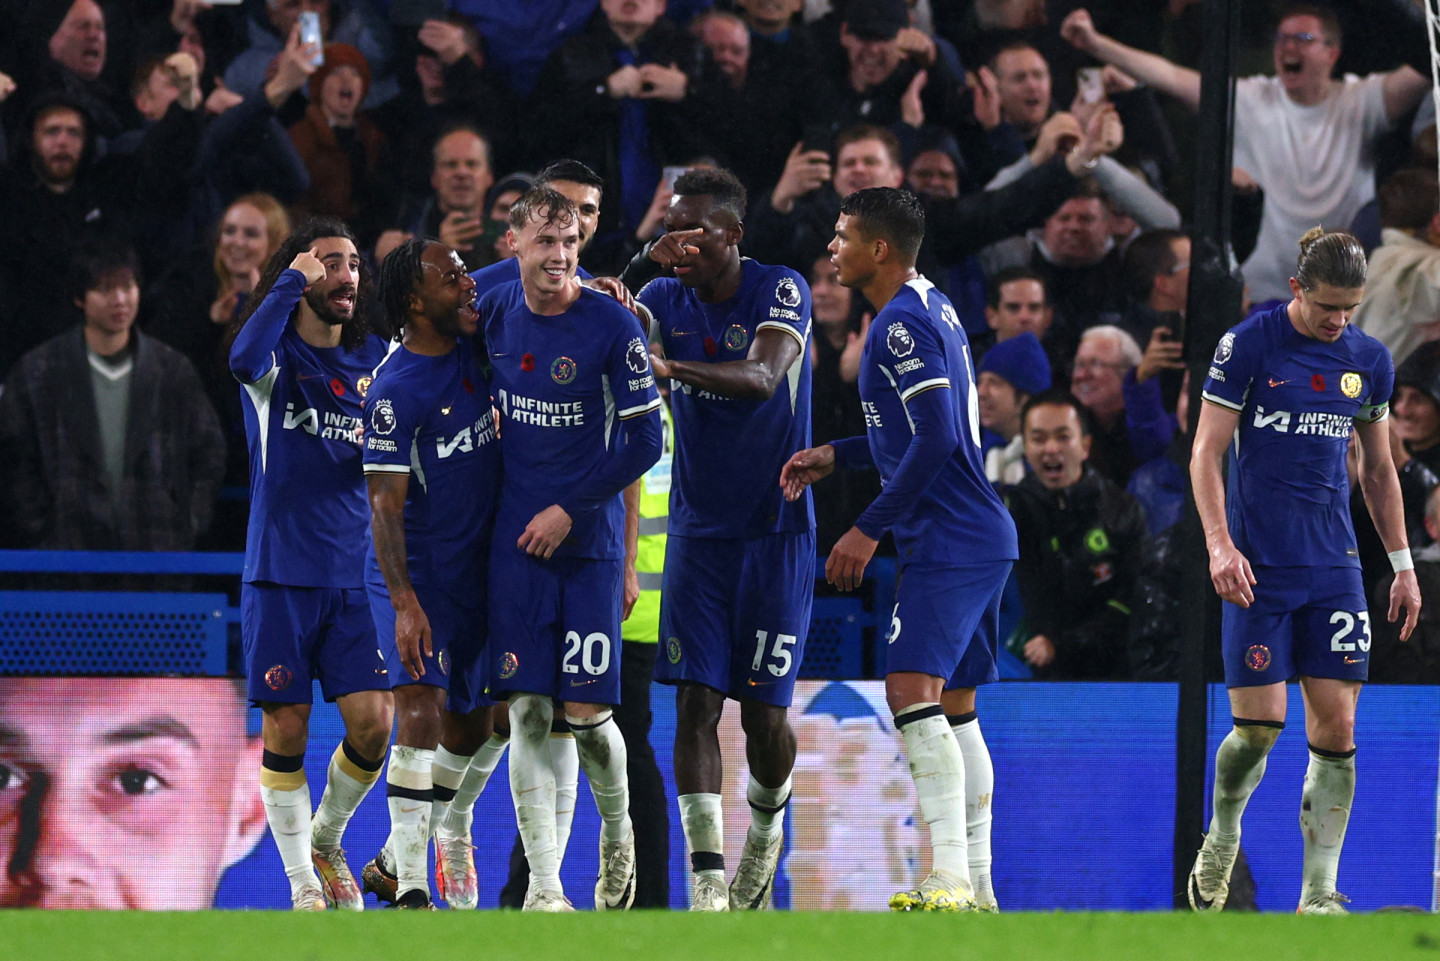 🏴󠁧󠁢󠁥󠁮󠁧󠁿 FINAL, Chelsea 4-4 Manchester City Que jogo foi este,  senhores?!?! 8 golos num duelo espetacular, que pode ser que tenha…